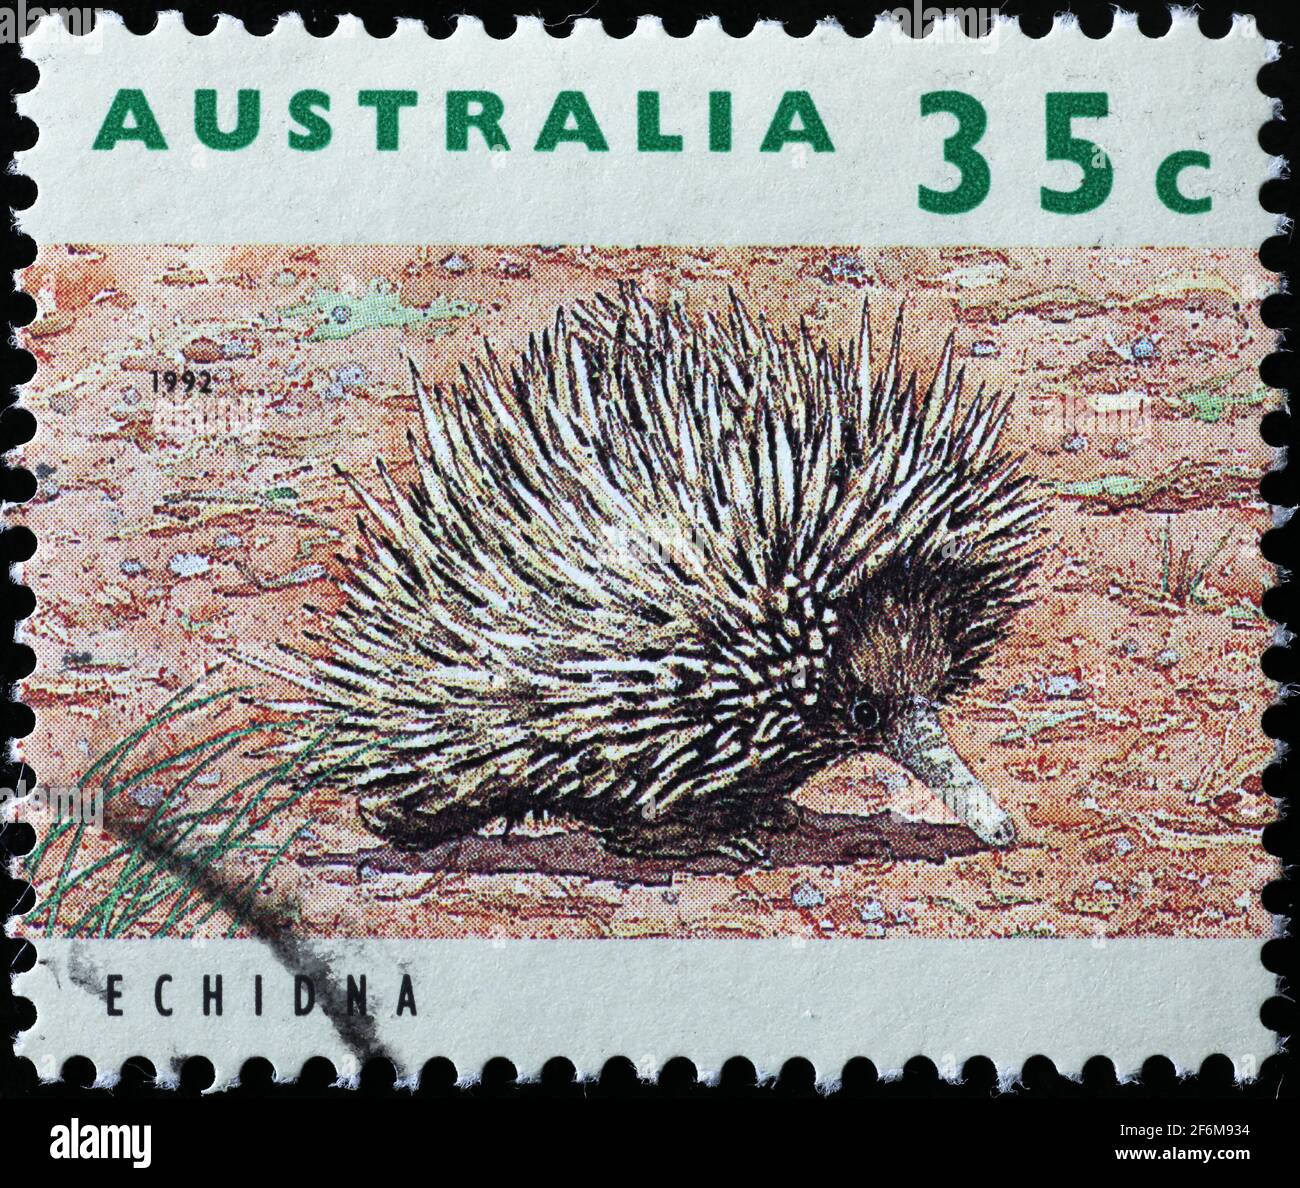 Echidna on australian postage stamp Stock Photo